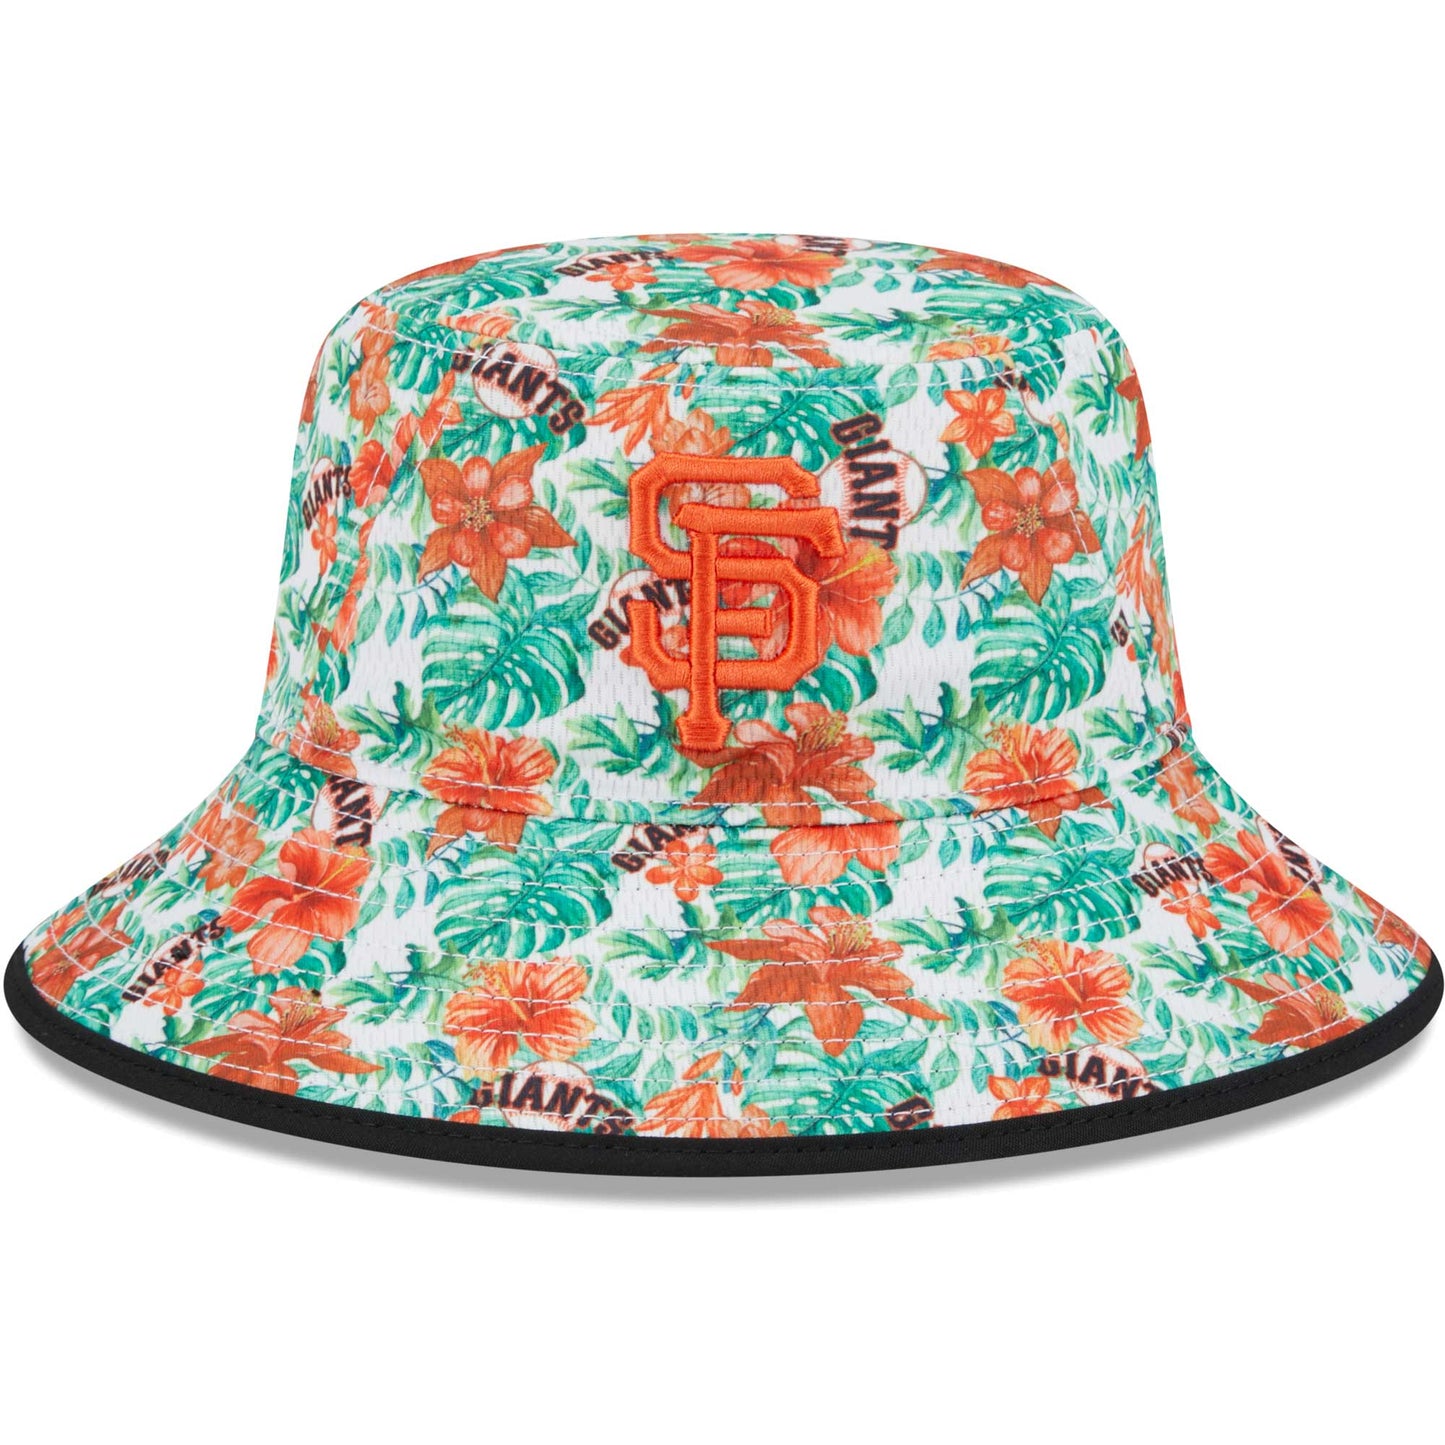 San Francisco Giants New Era Tropic Floral Bucket Hat